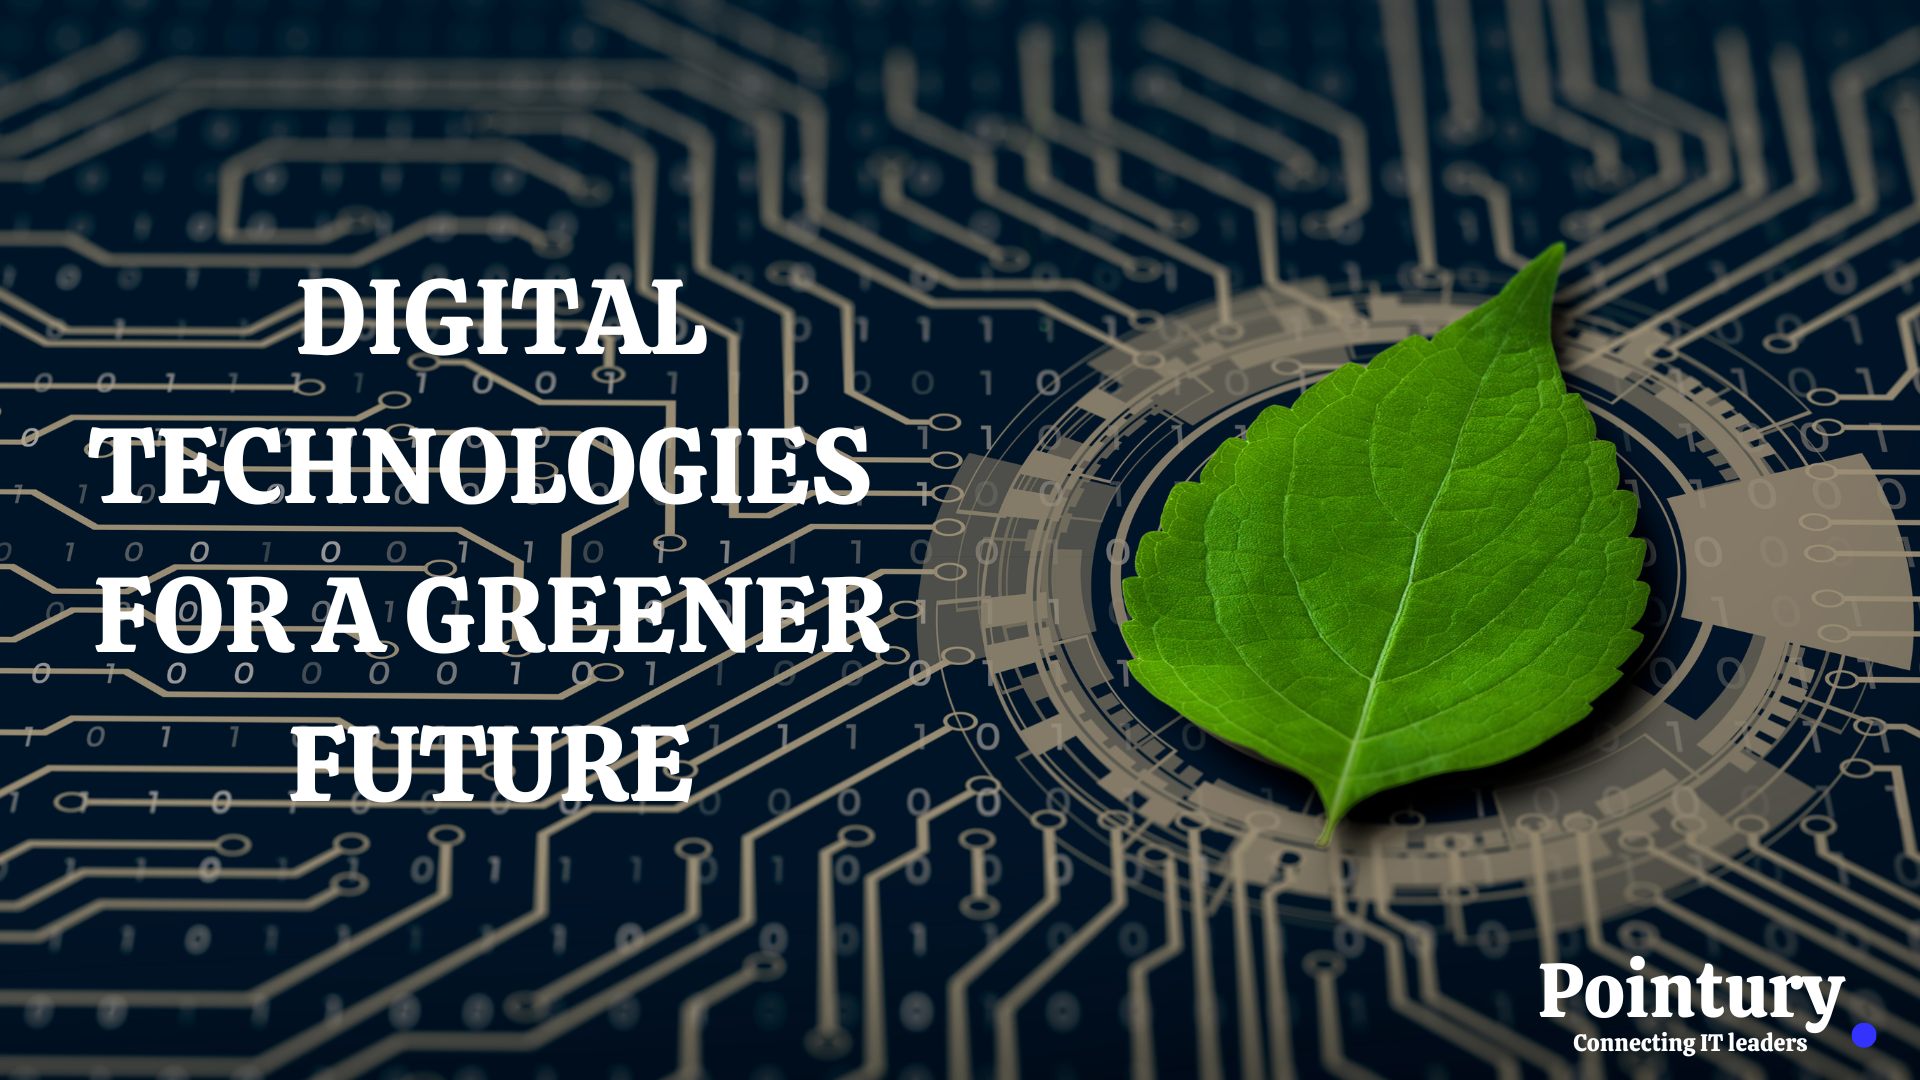 DIGITAL TECHNOLOGIES FOR A GREENER FUTURE